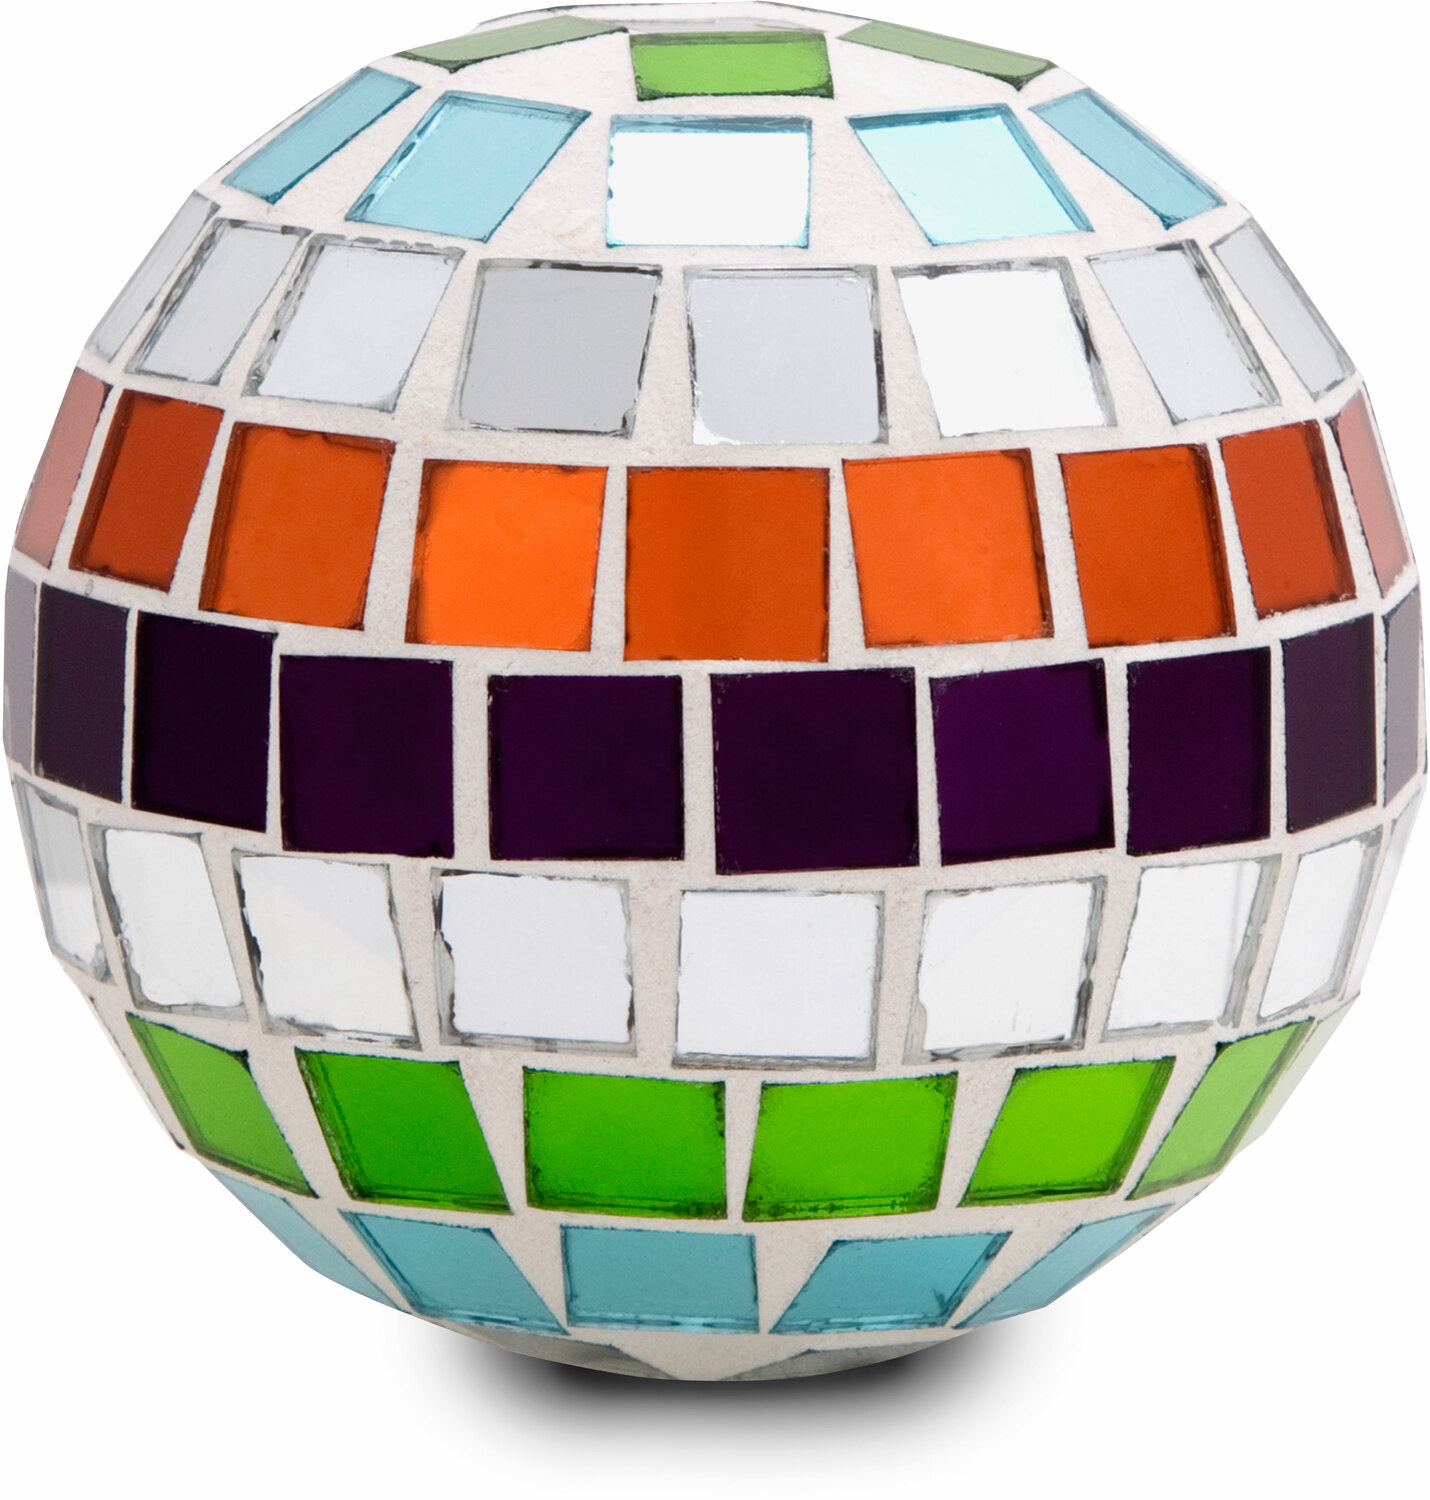 Mosaic Glass Decorative Ball by Merry Mosaics - Mosaic Glass Decorative Ball - Small 2.5" Mosaic Glass Decorative Ball
